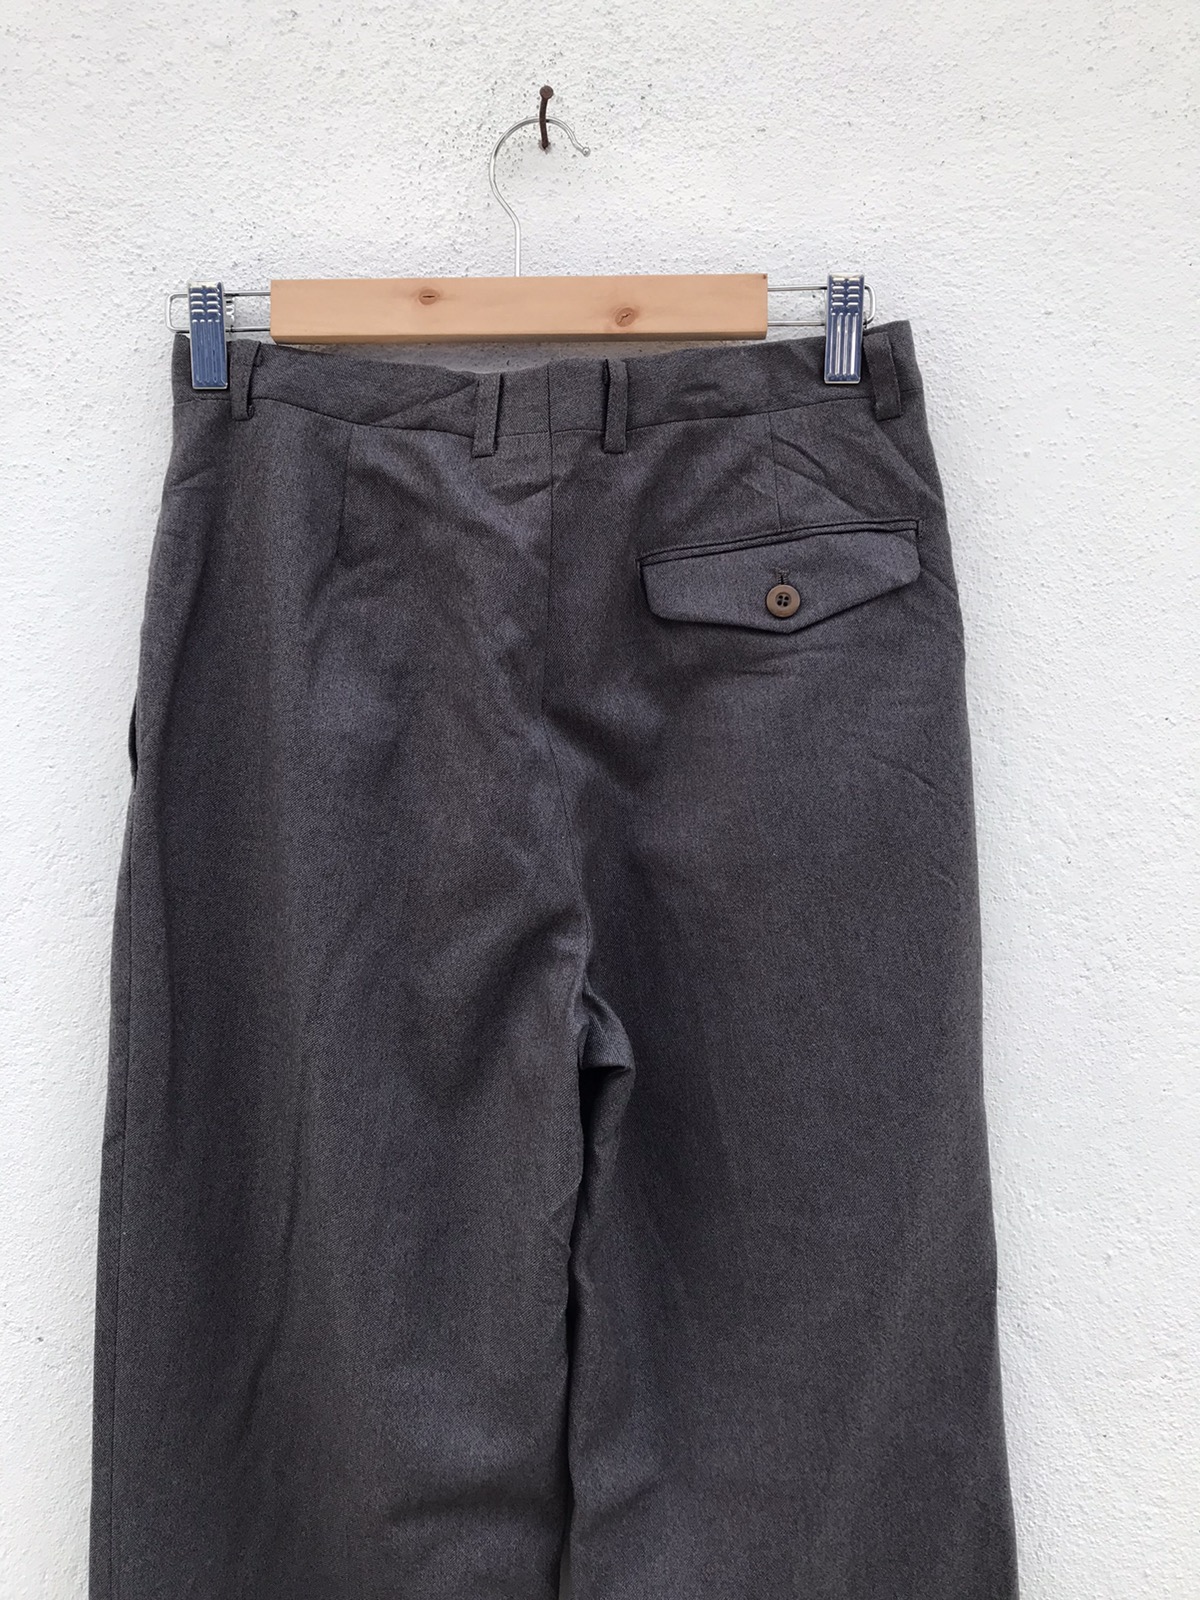 Made in Japan JUN Wool Trousers - 6